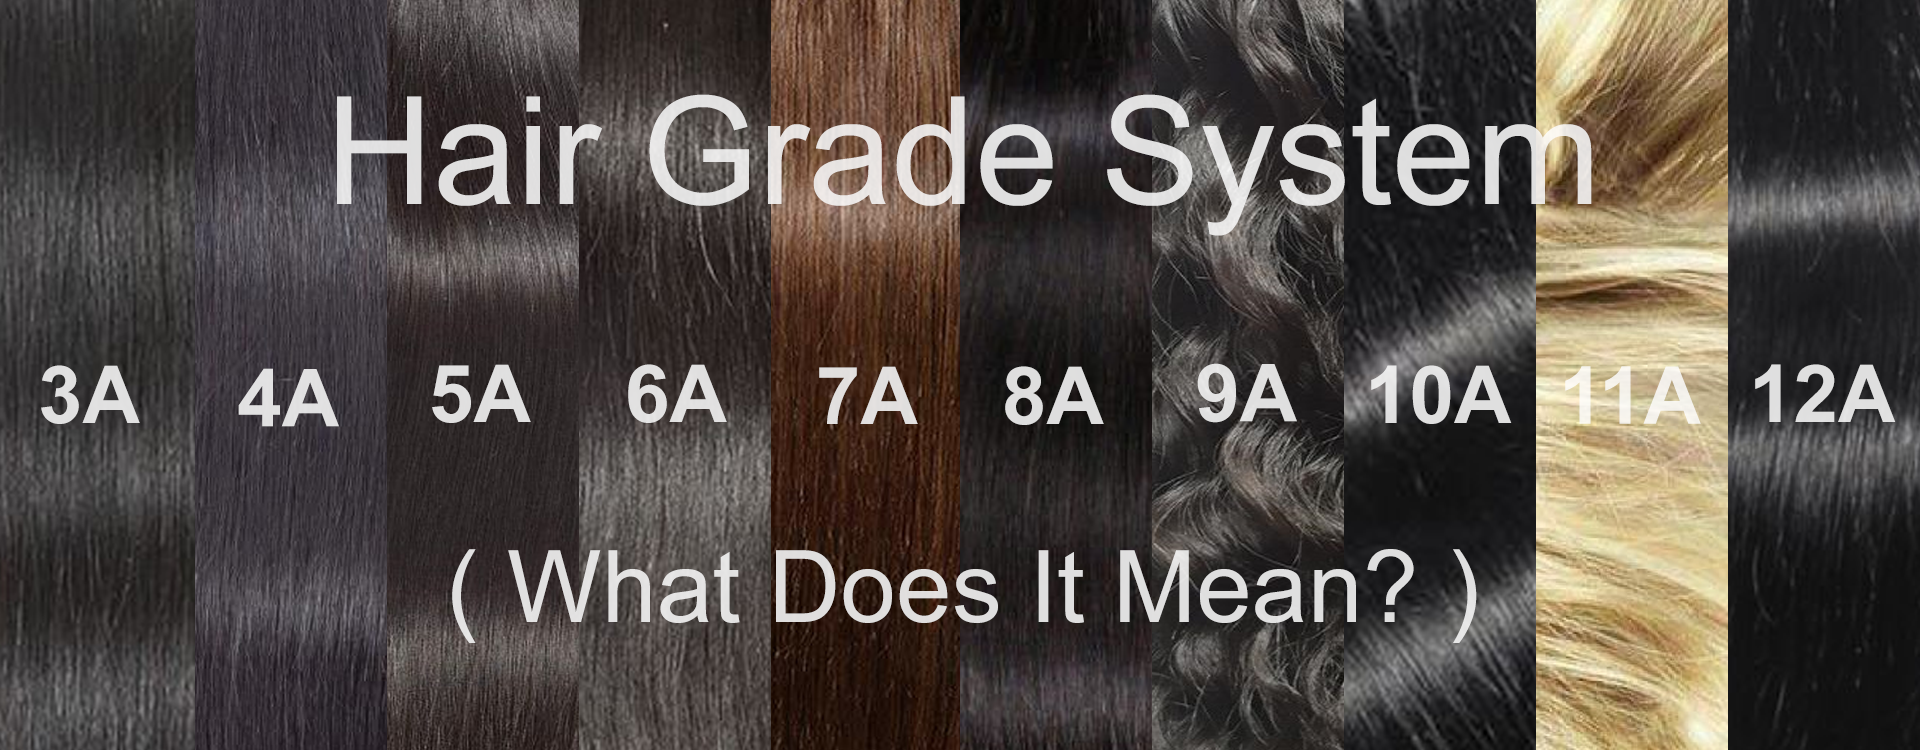 What do human hair extension grades mean?